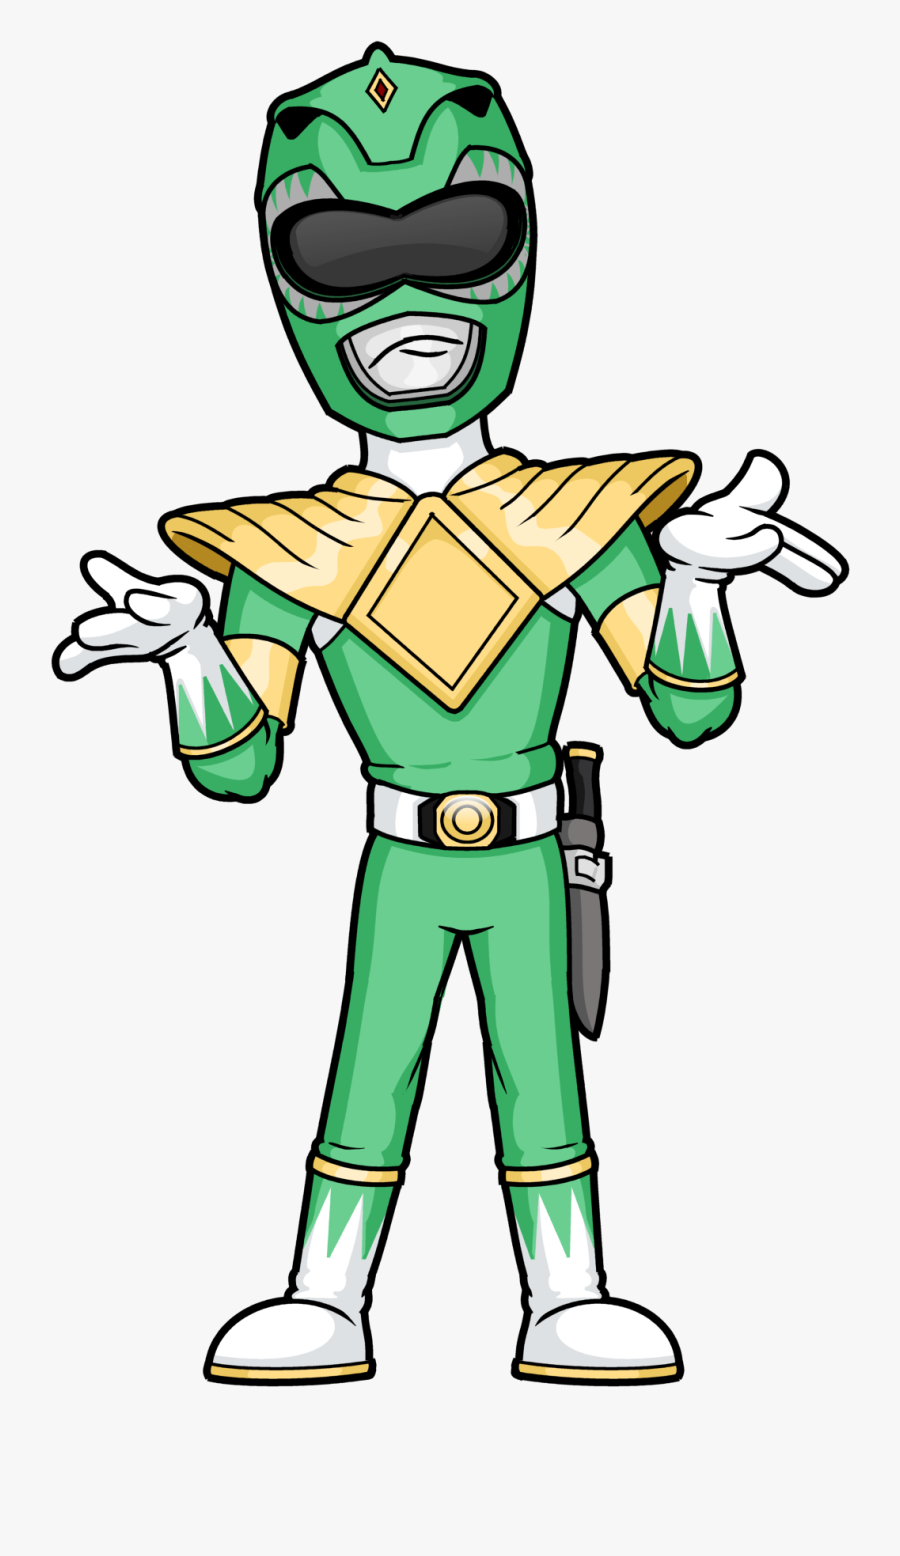 02-2 - Green Power Rangers Png, Transparent Clipart